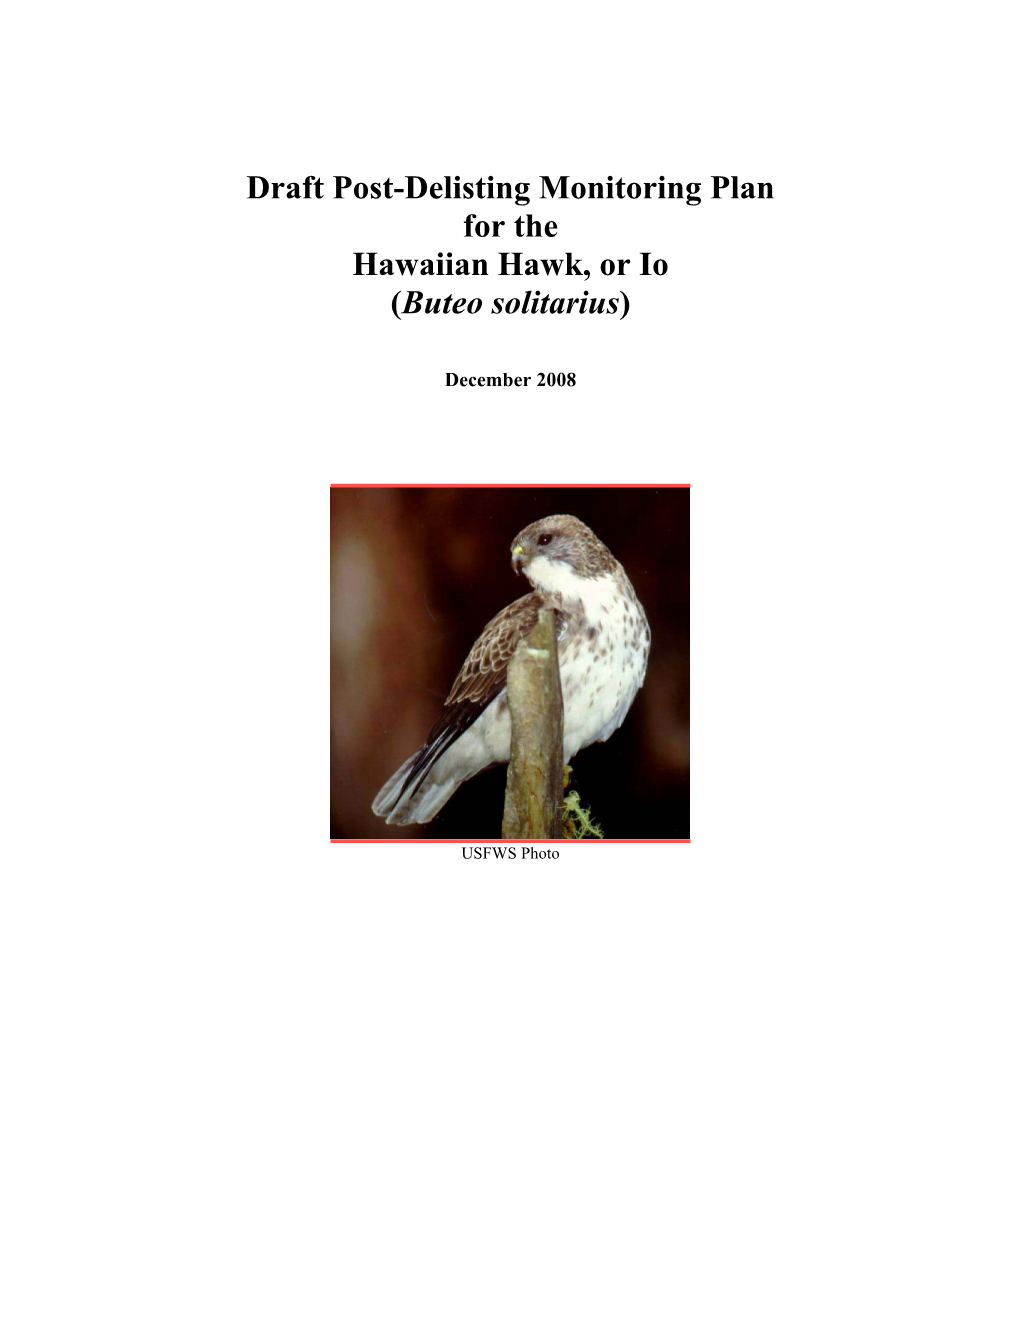 Draft Post-Delisting Monitoring Plan for the Hawaiian Hawk, Or Io (Buteo Solitarius)